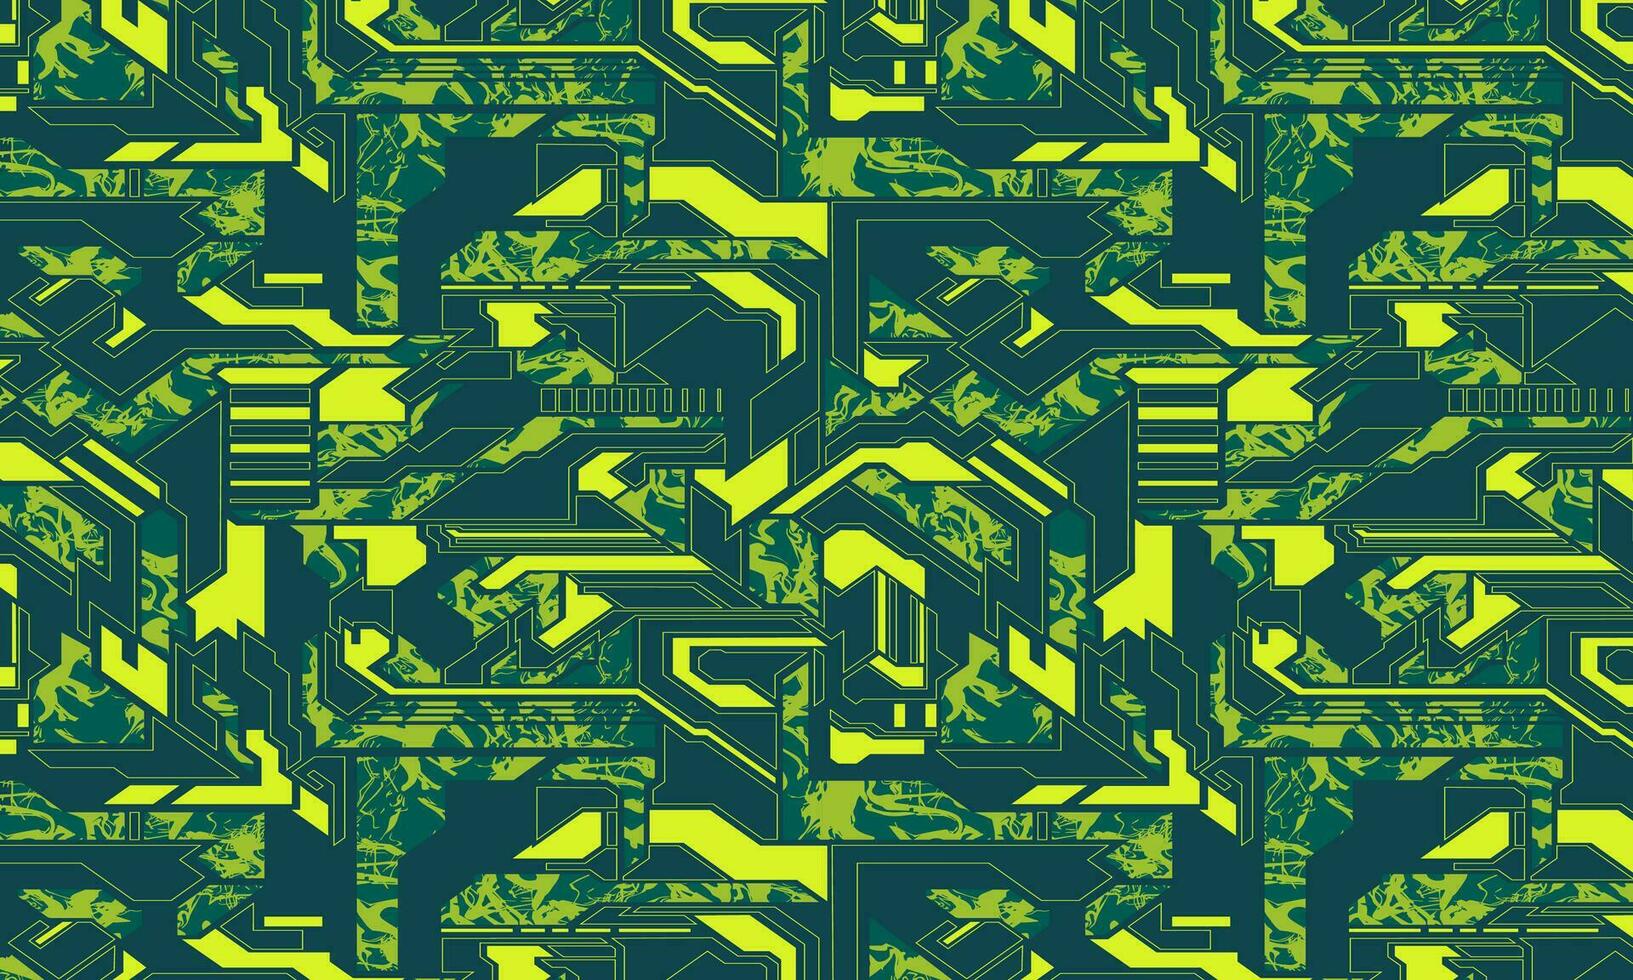 grön abstrakt grunge mönster bakgrund design vektor